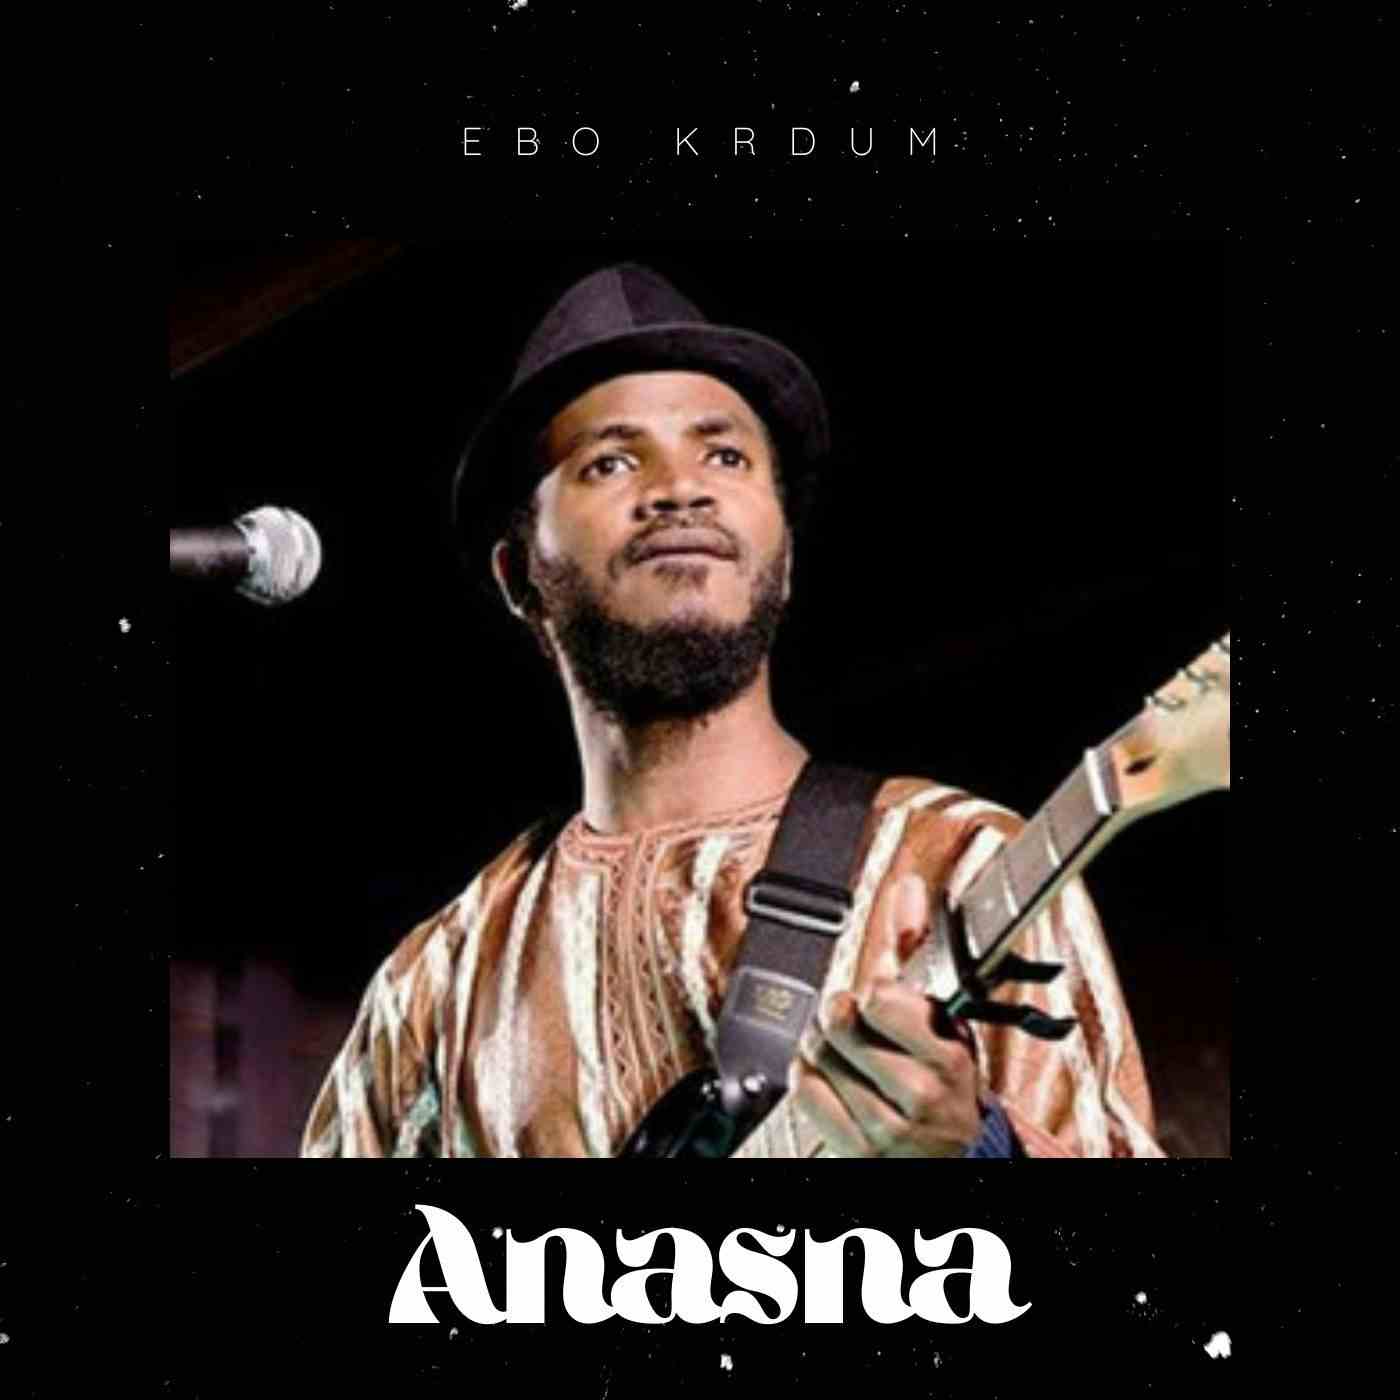 Photo of Ebo Krdums album Anasna